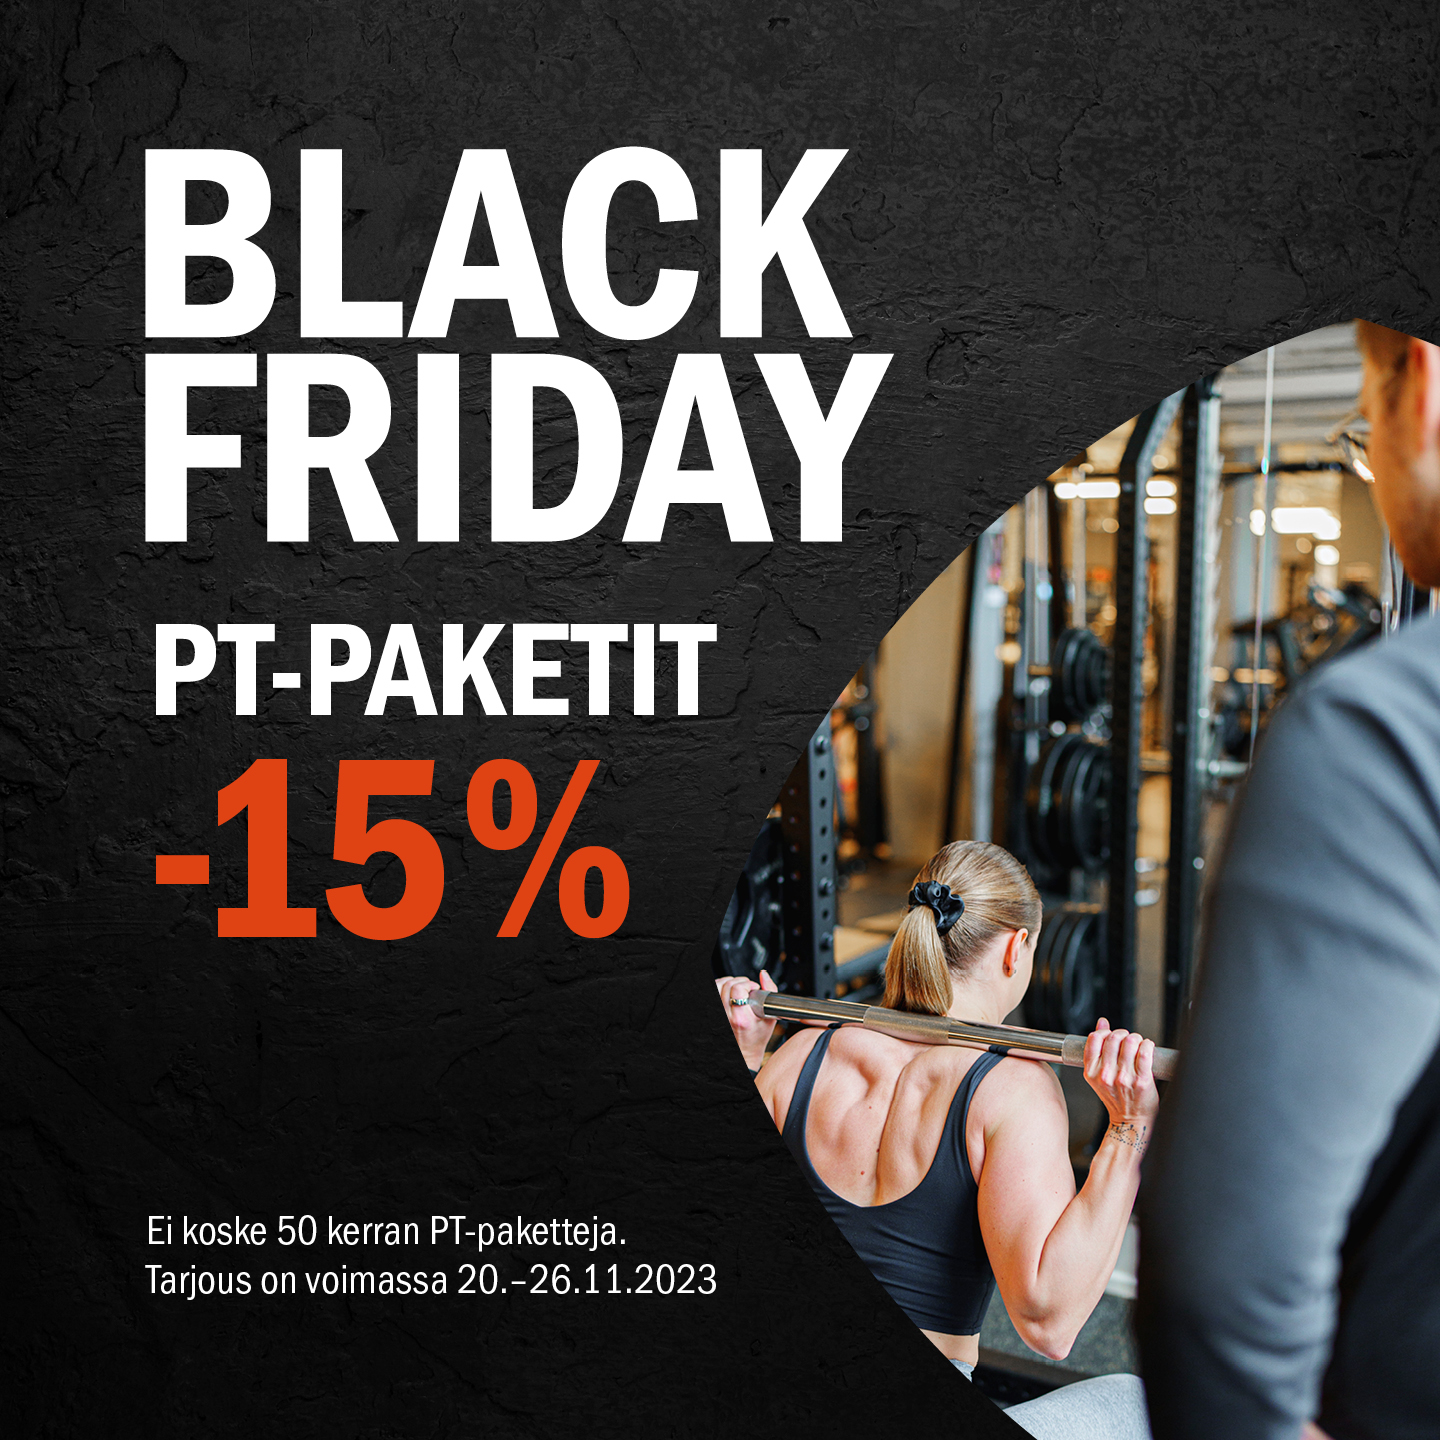 PT paketit Black Friday tarjouksessa - 15%!